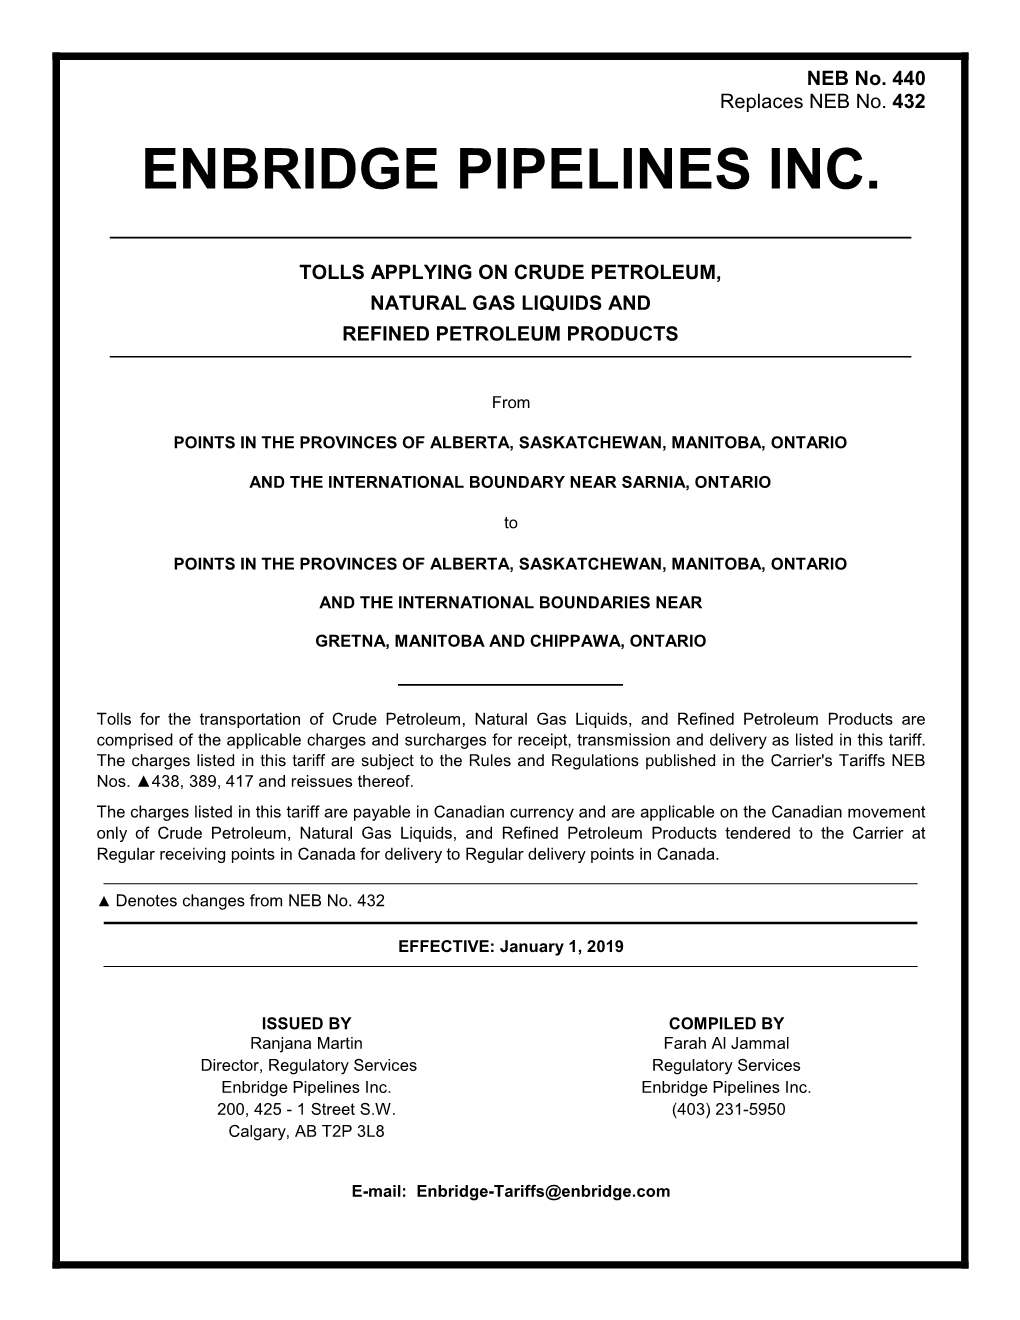 Enbridge Pipelines Inc